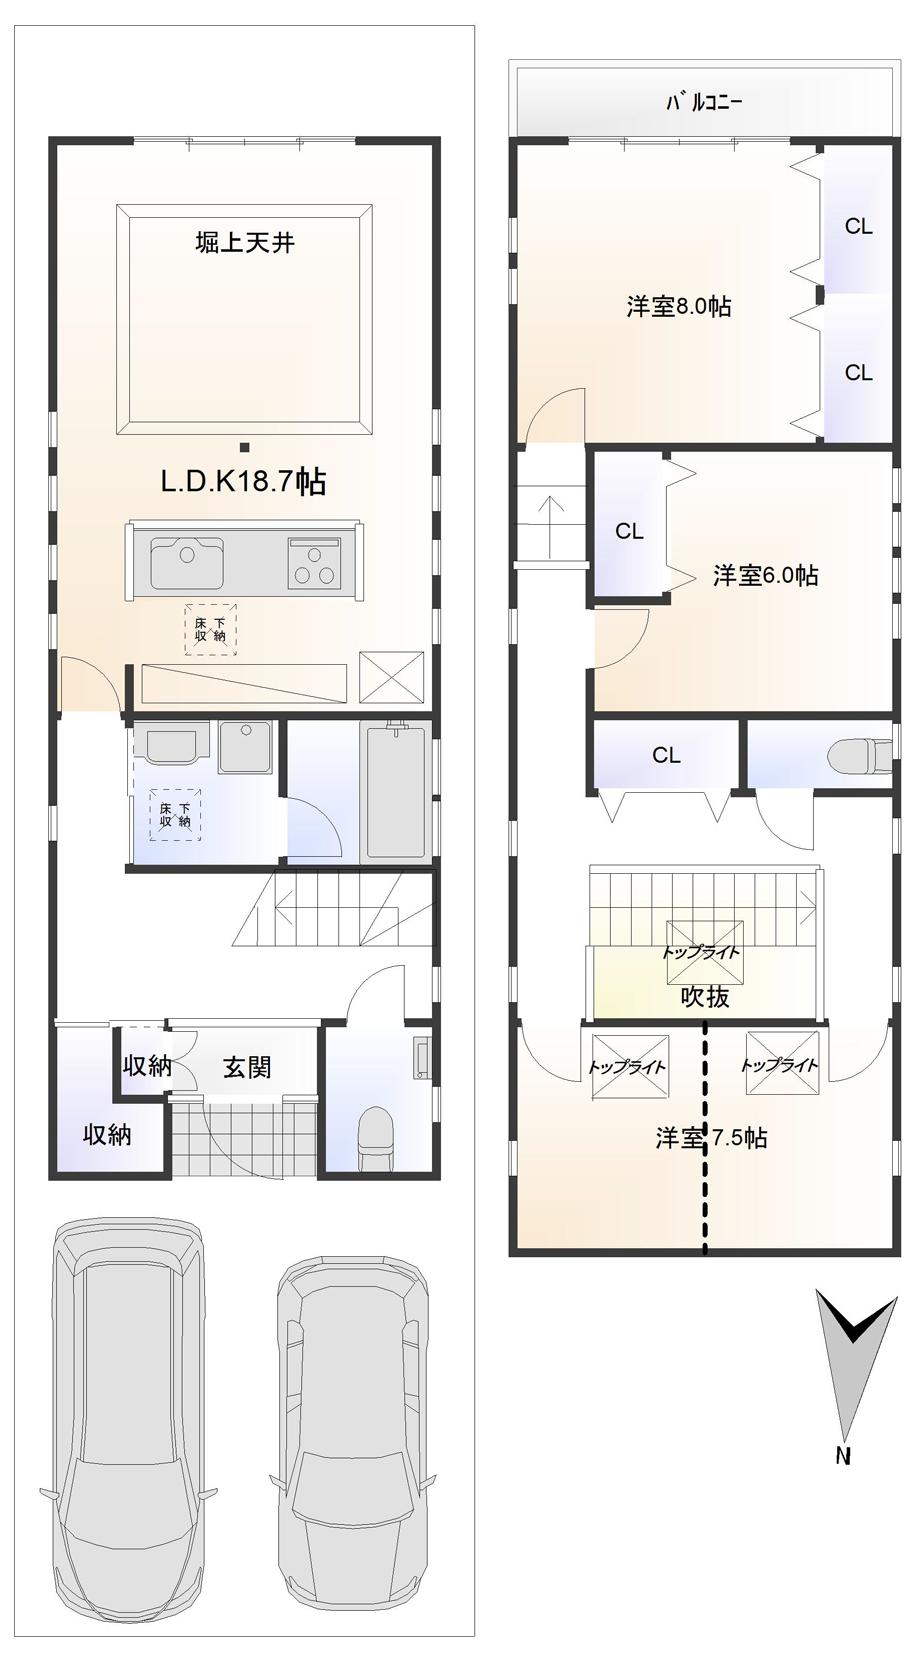 Floor plan. 39,800,000 yen, 3LDK, Land area 112.4 sq m , Building area 109.72 sq m